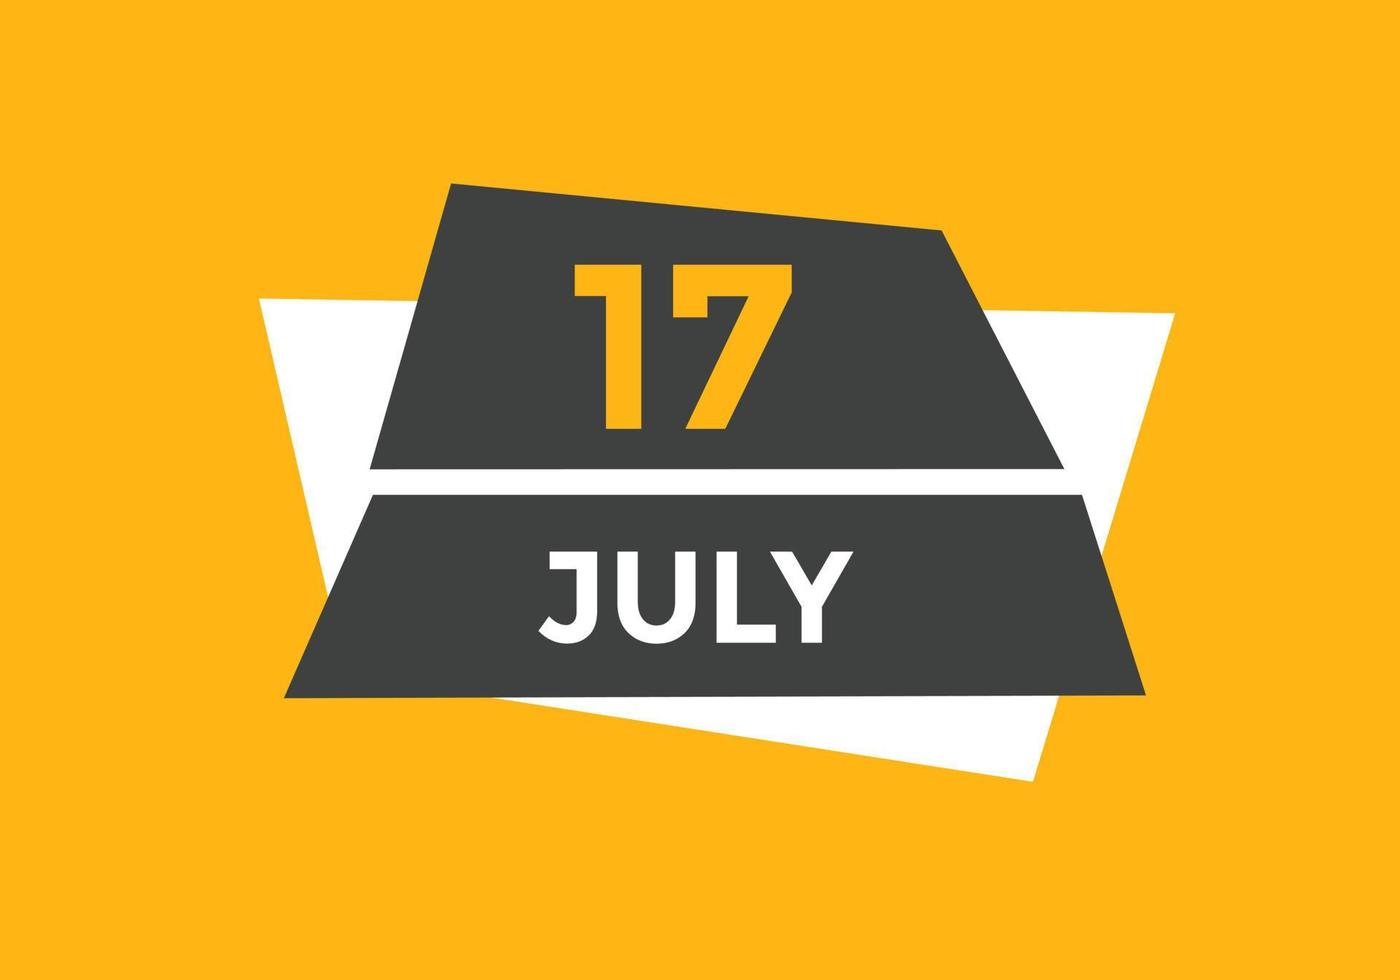 july 17 calendar reminder. 17th july daily calendar icon template. Calendar 17th july icon Design template. Vector illustration